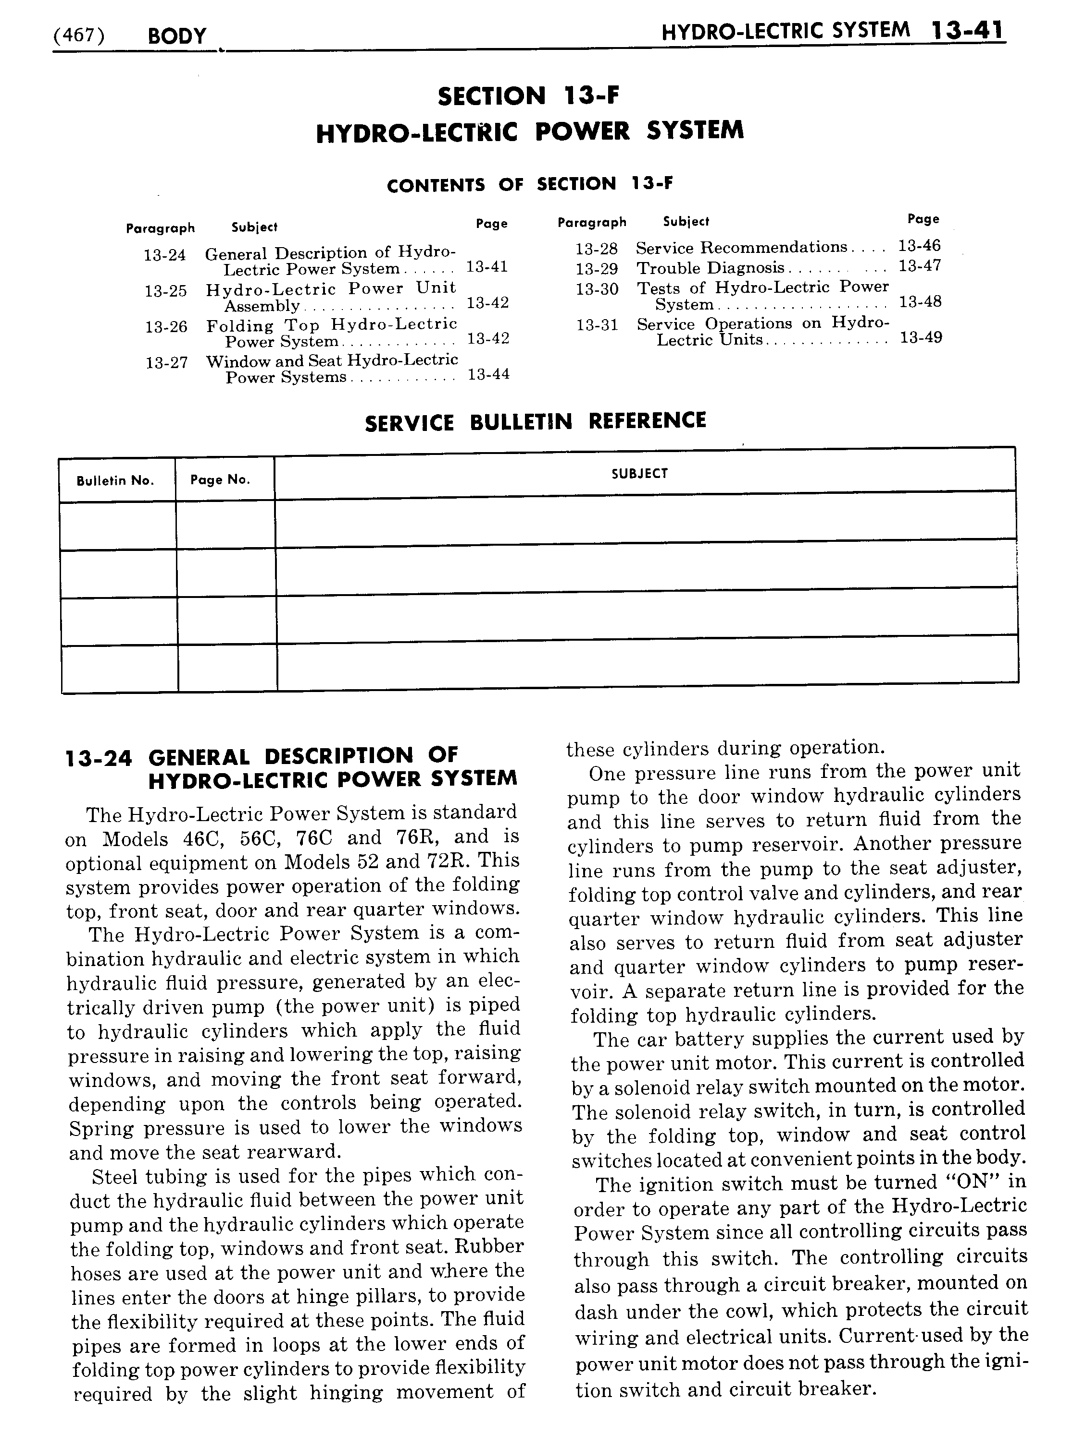 n_14 1951 Buick Shop Manual - Body-041-041.jpg